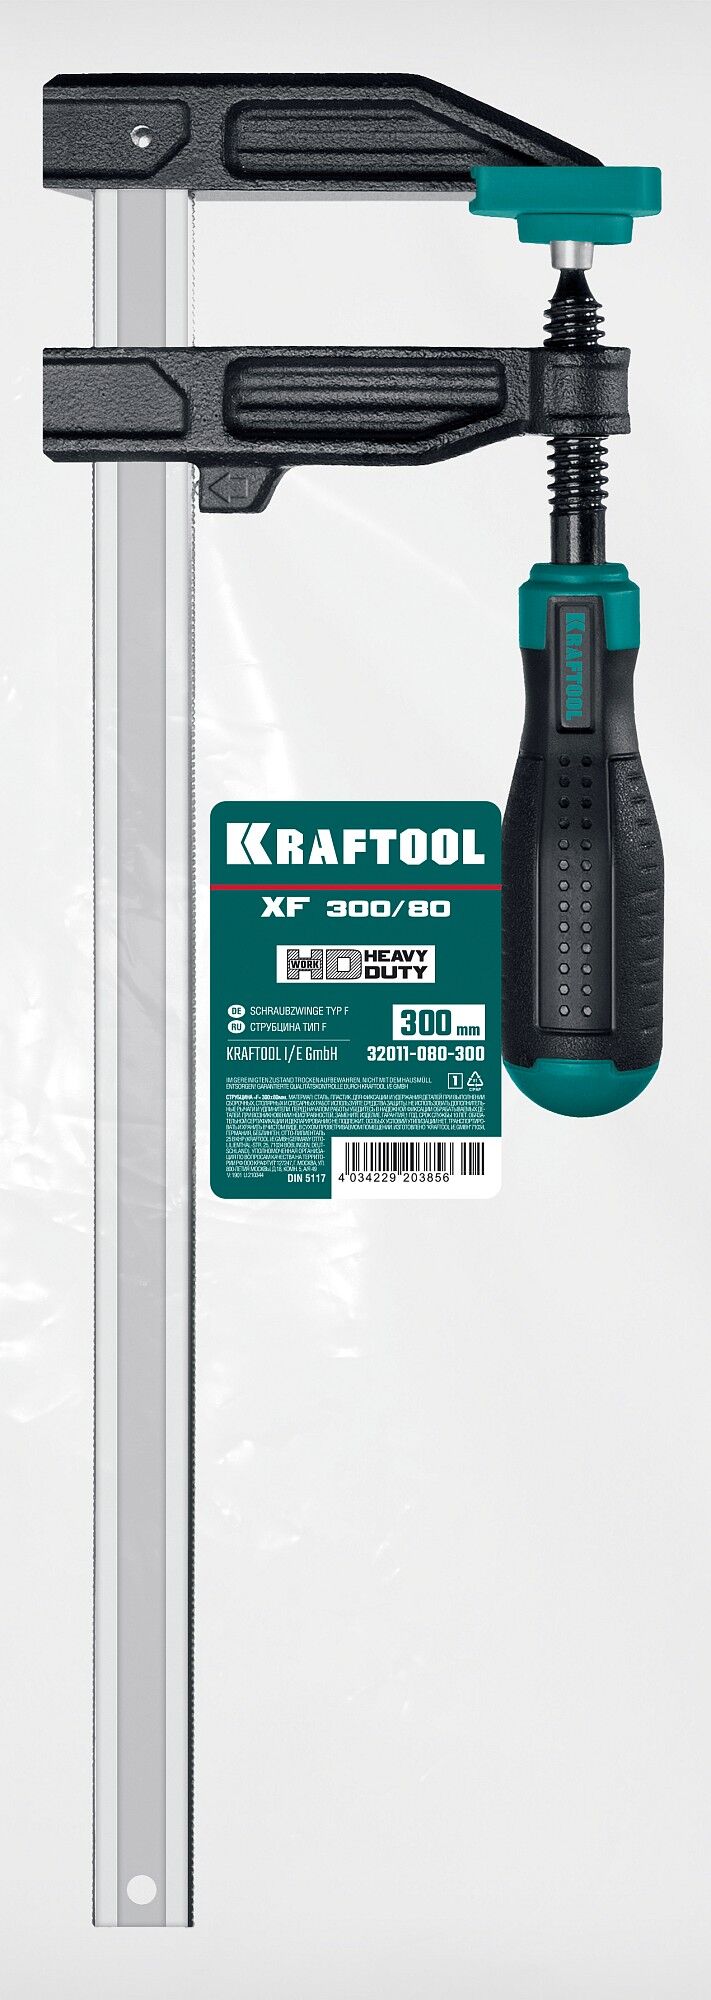 KRAFTOOL MF-300/080 80х300 мм, Струбцина F (32011-080-300) 32011-080-300_z01